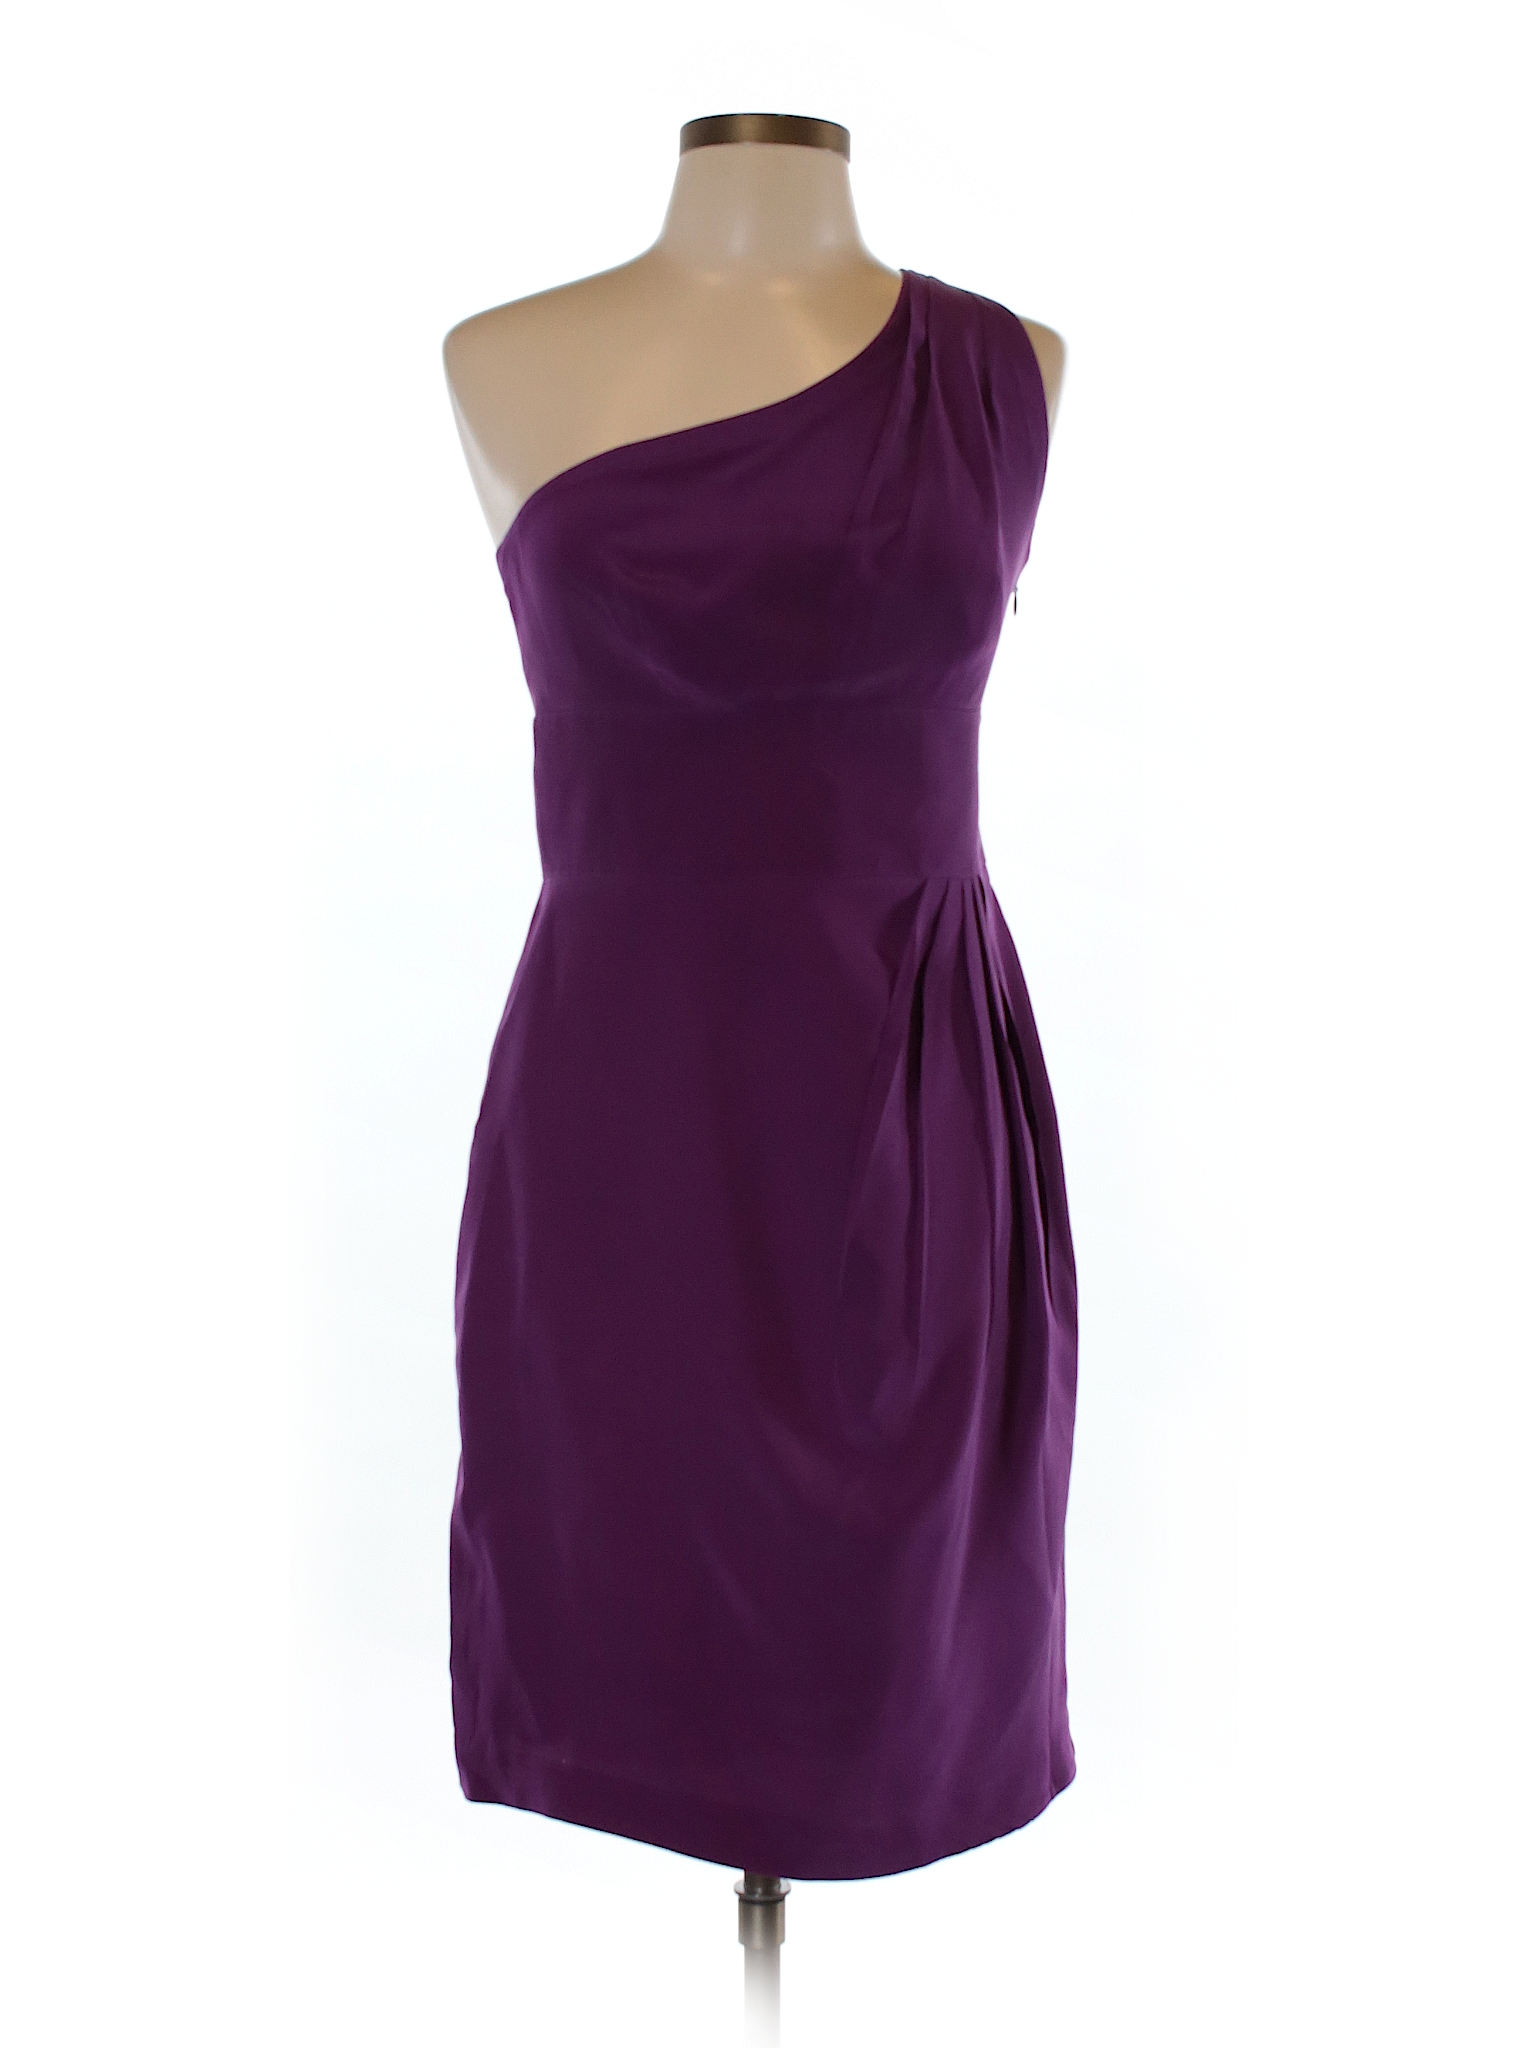 Trina Turk 100% Silk Solid Dark Purple Cocktail Dress Size 8 - 78% off ...